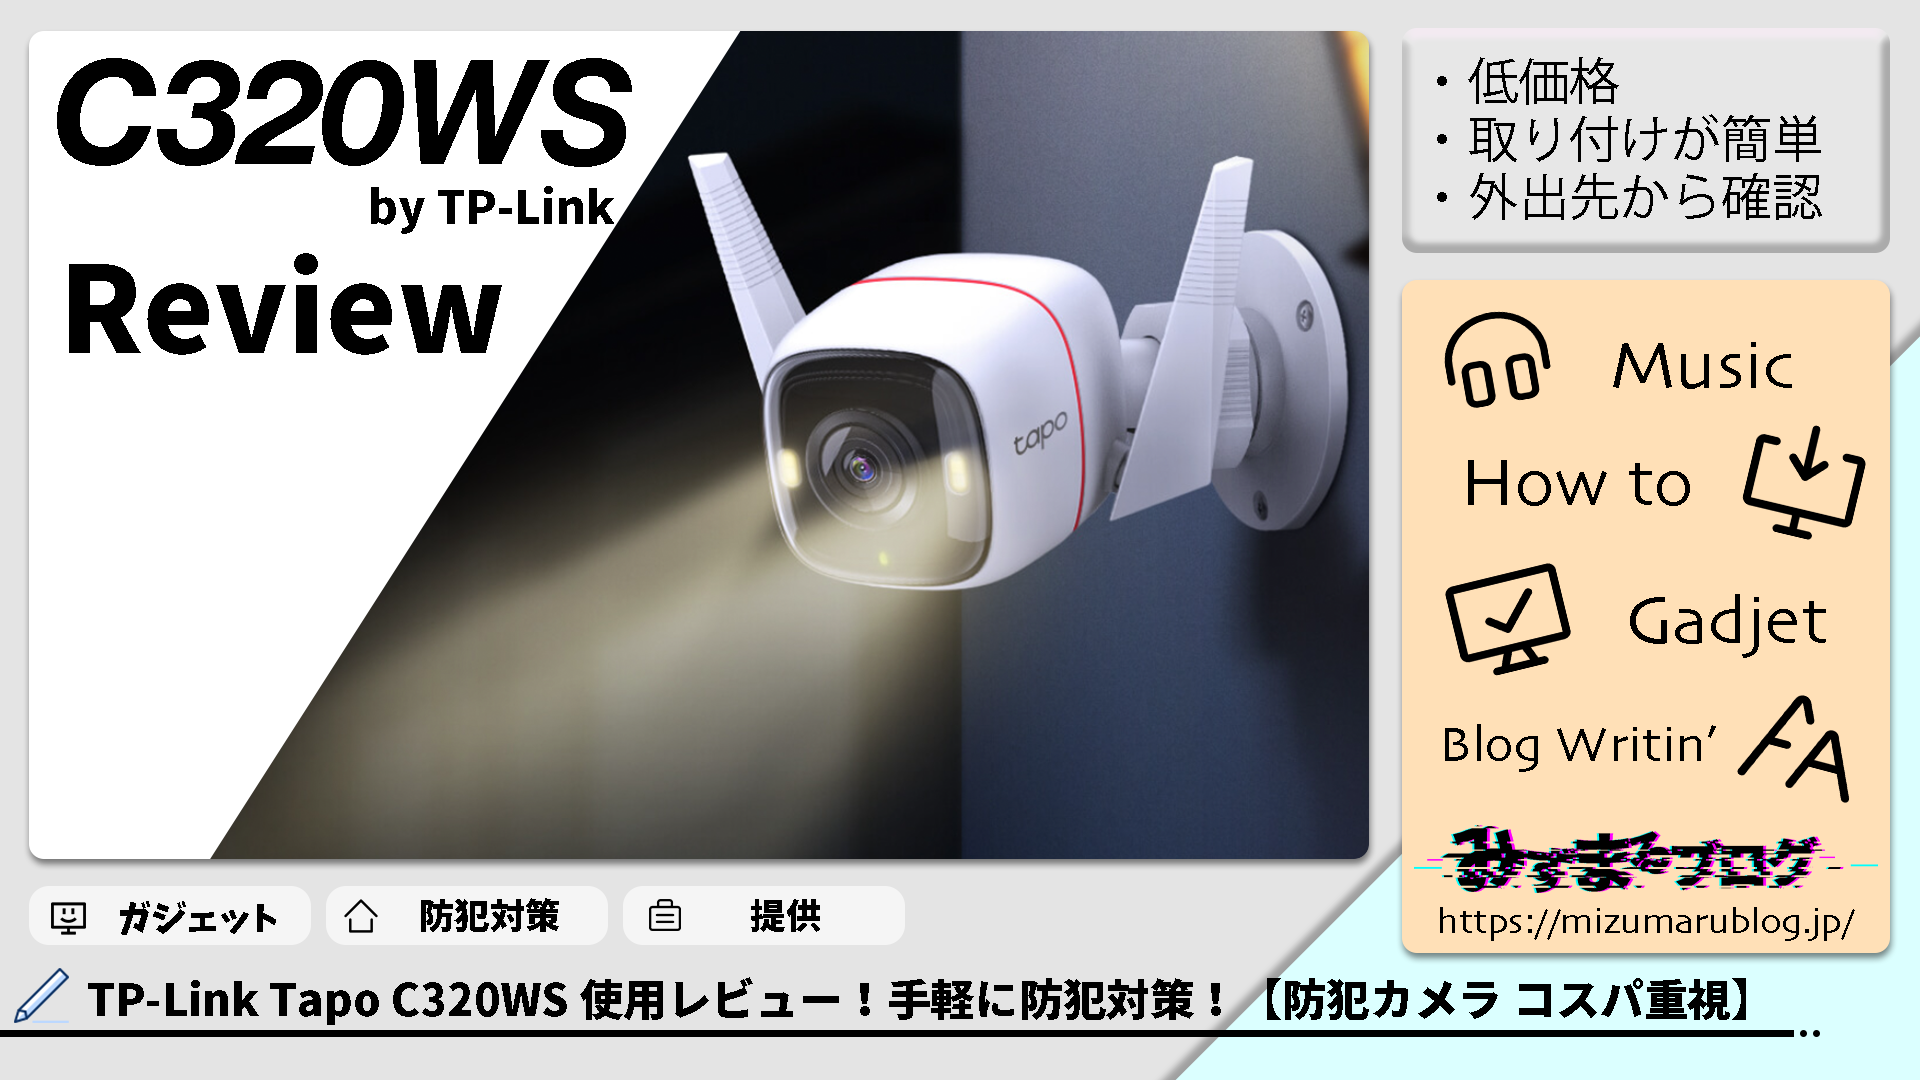 TP-Link Tapo C320WS 使用レビュー！手軽に防犯対策！【防犯カメラ コスパ重視】 - みずまるブログ